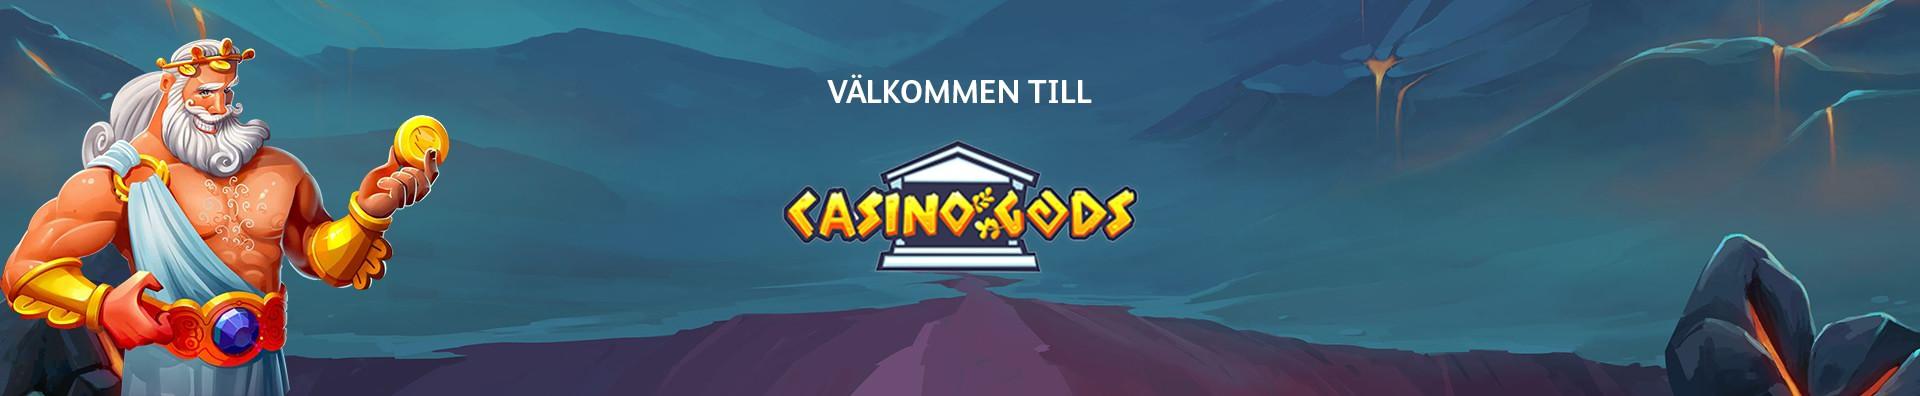 Casino Gods Sverige Recension